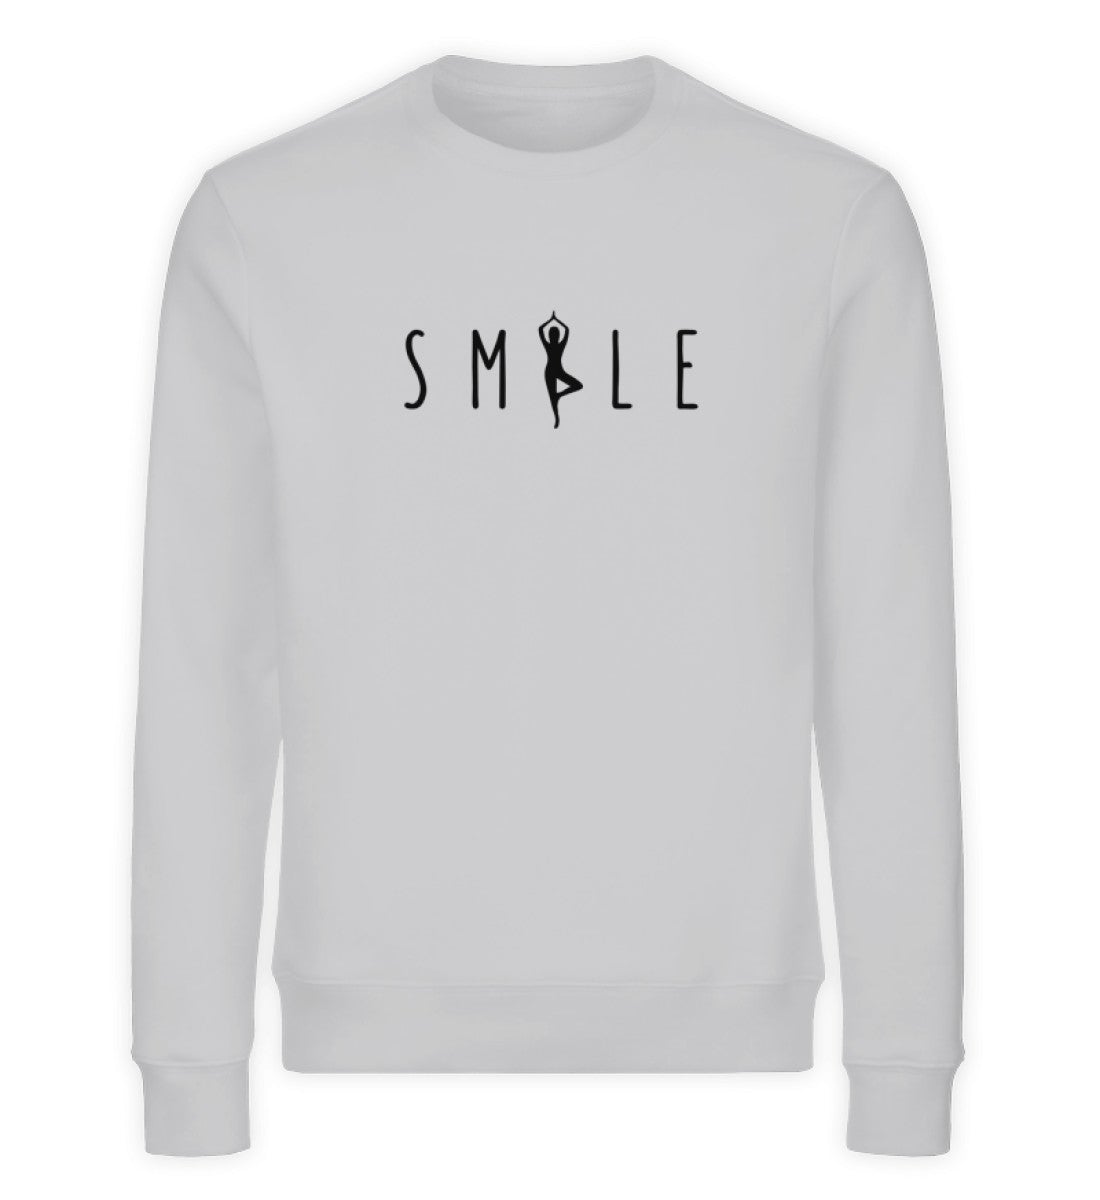 Smile Bio Sweatshirt Unisex